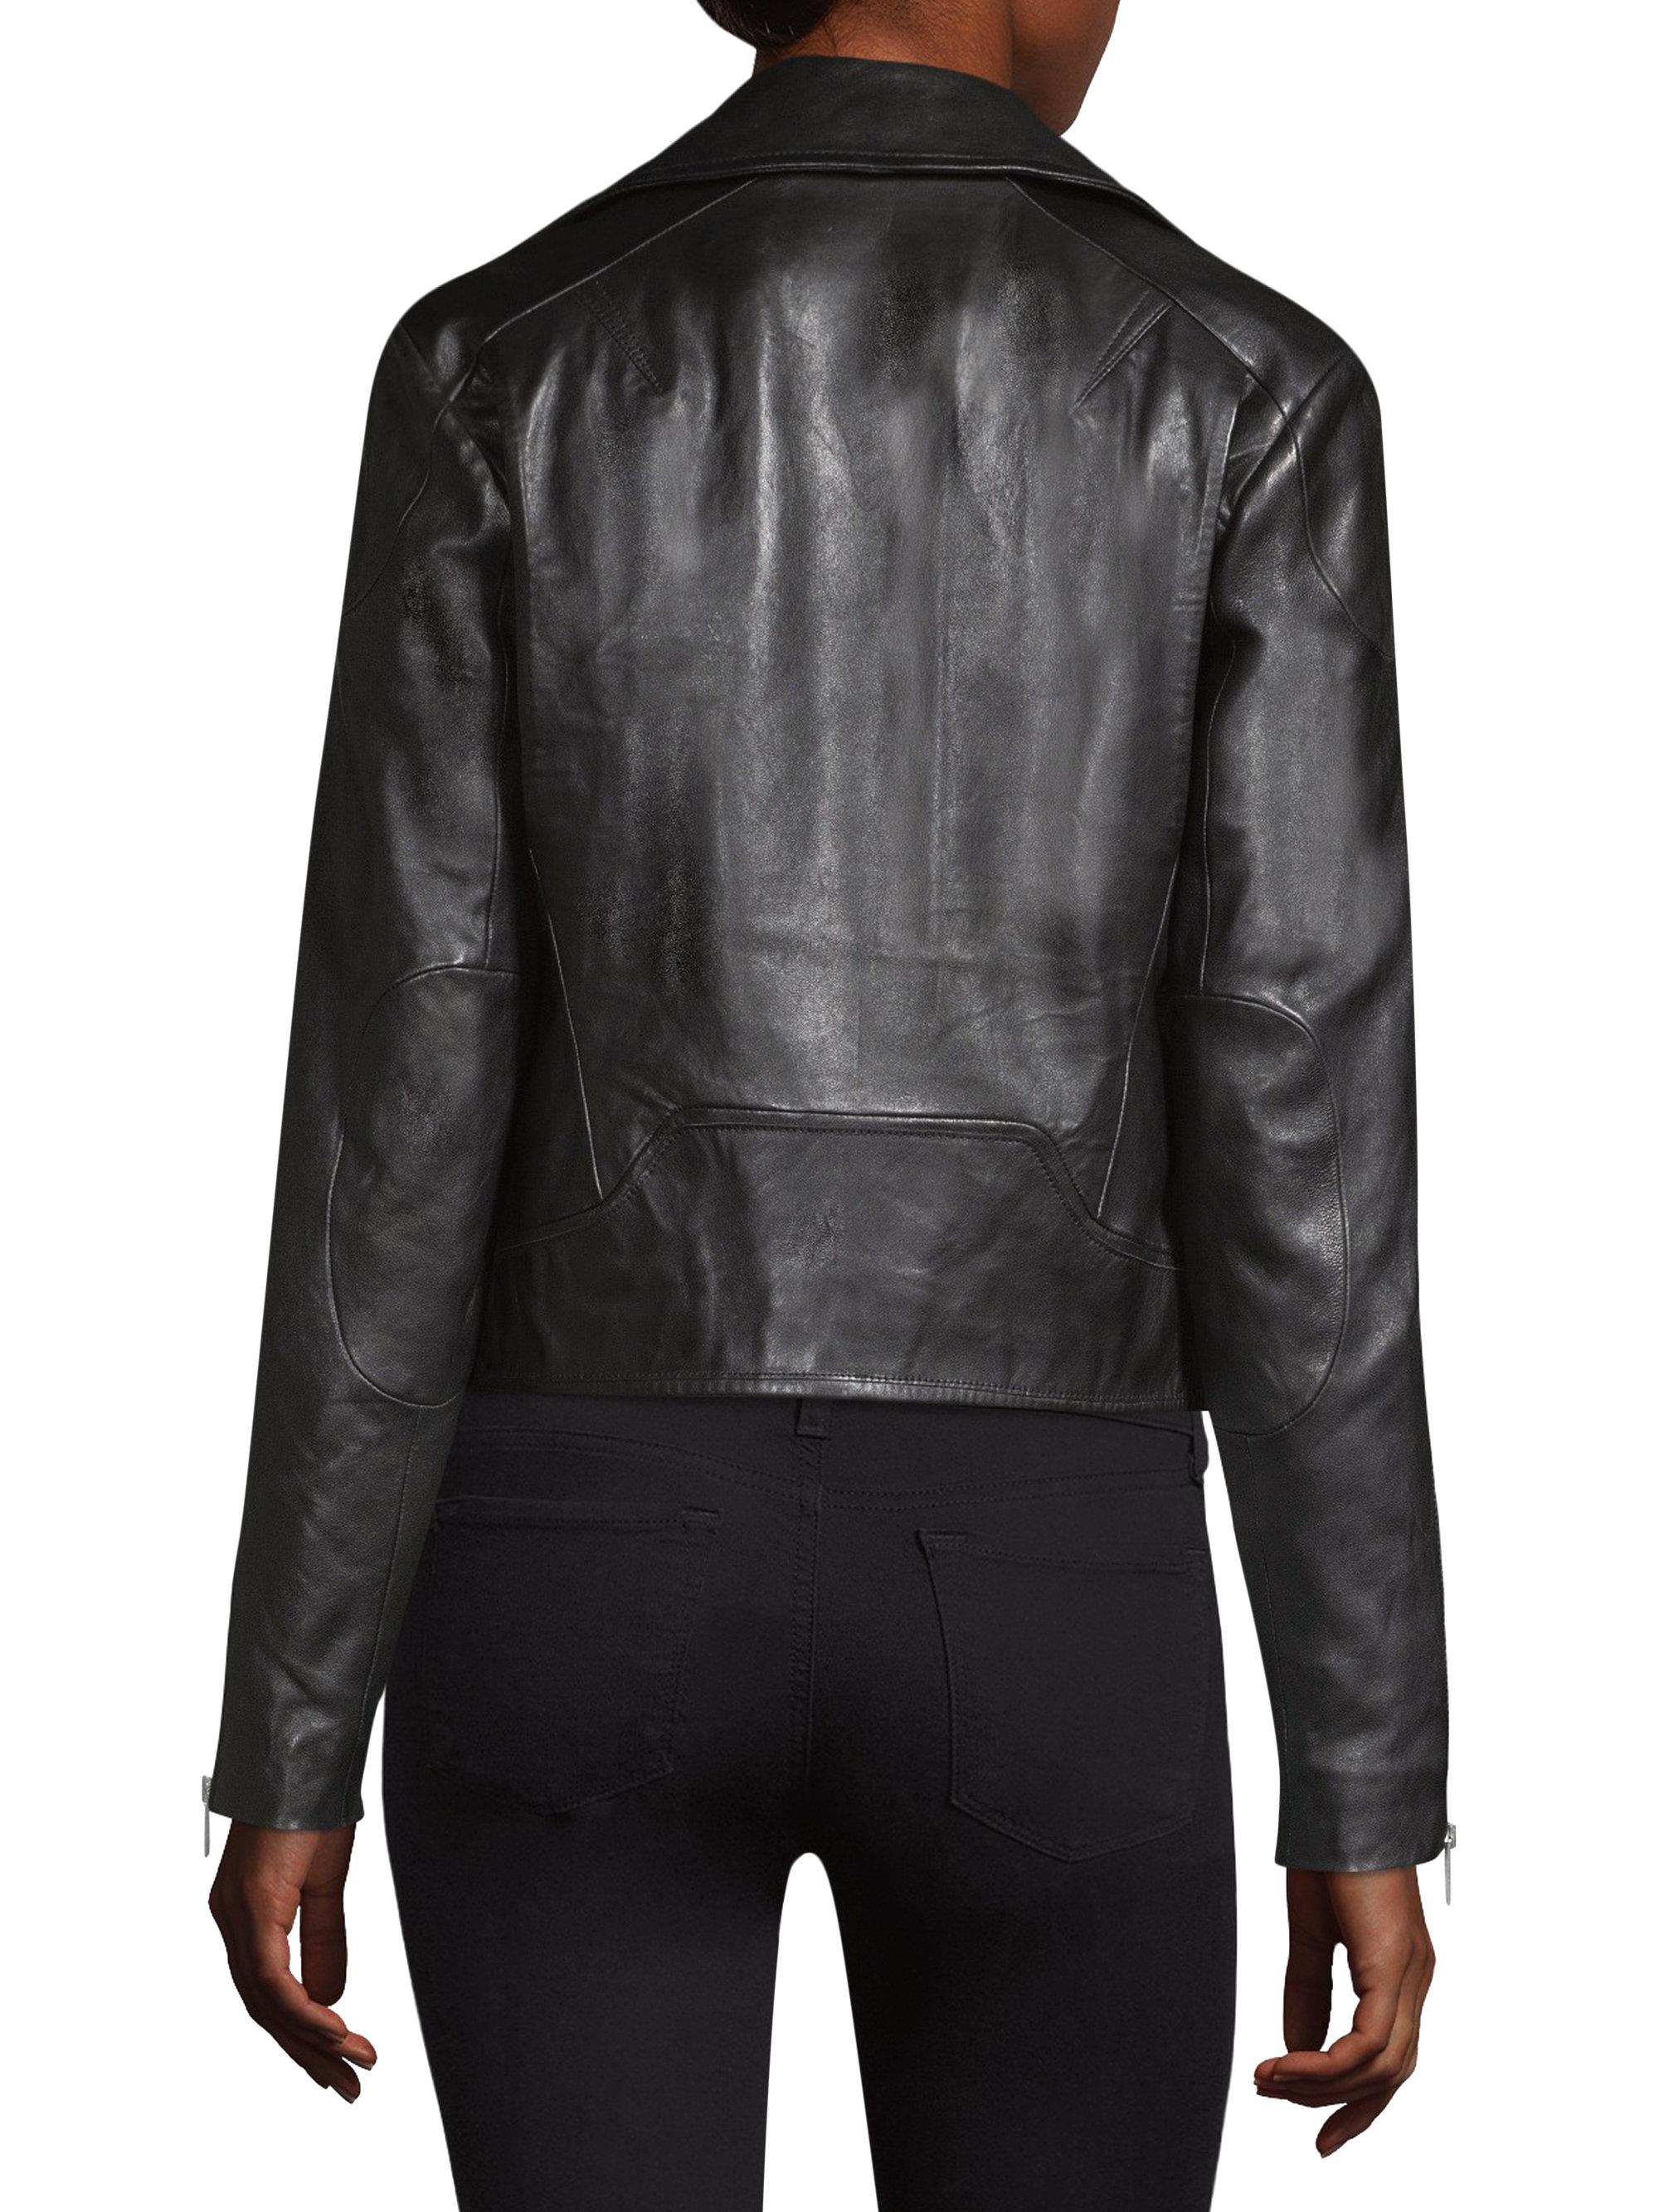 Rag & Bone Griffin Leather Jacket in Black - Lyst